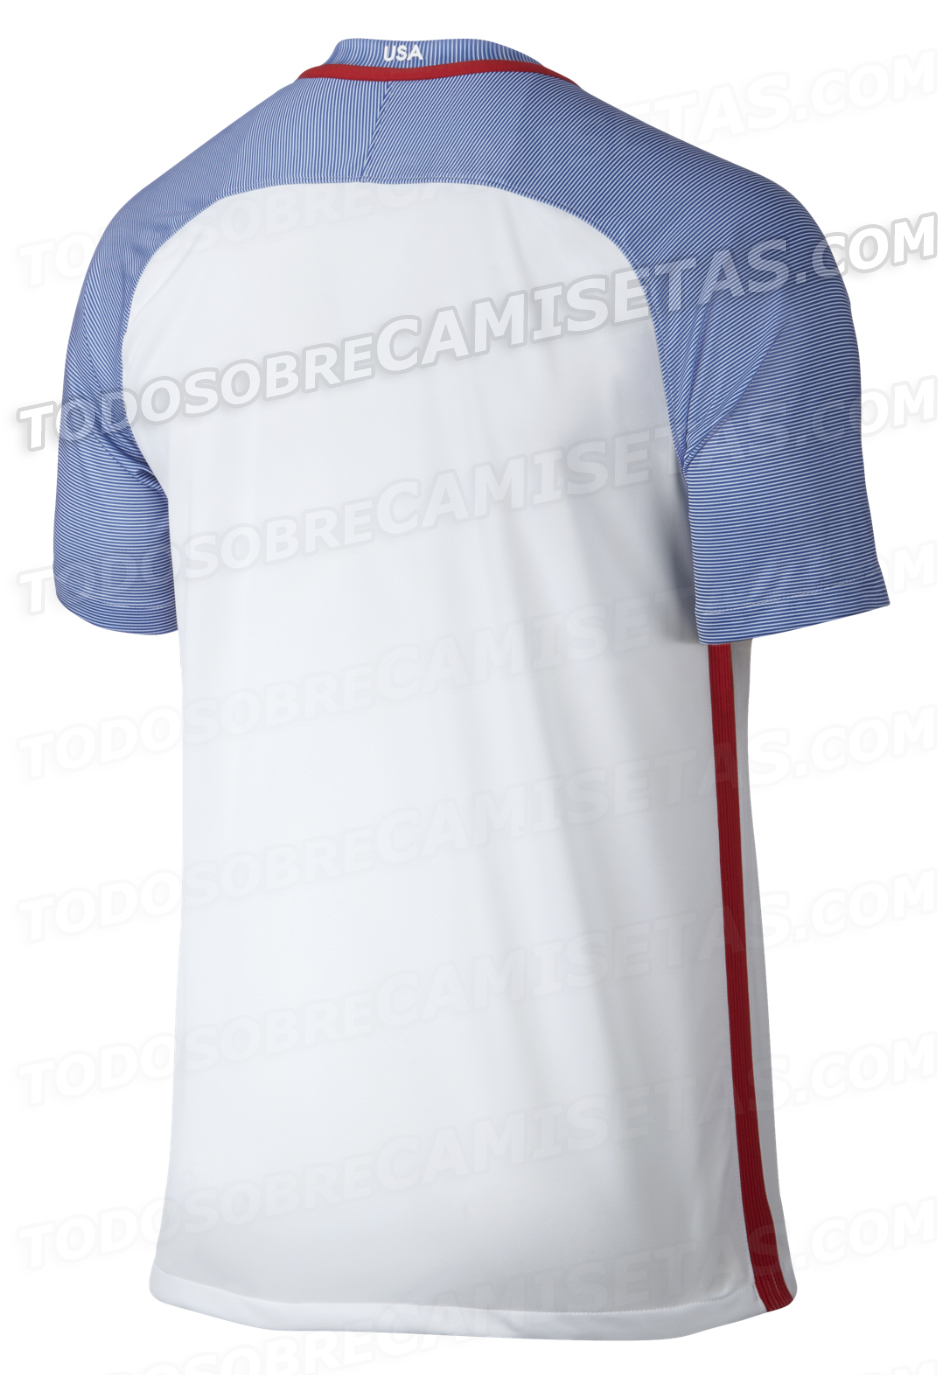 USA Copa America Centenario home jersey LEAKED